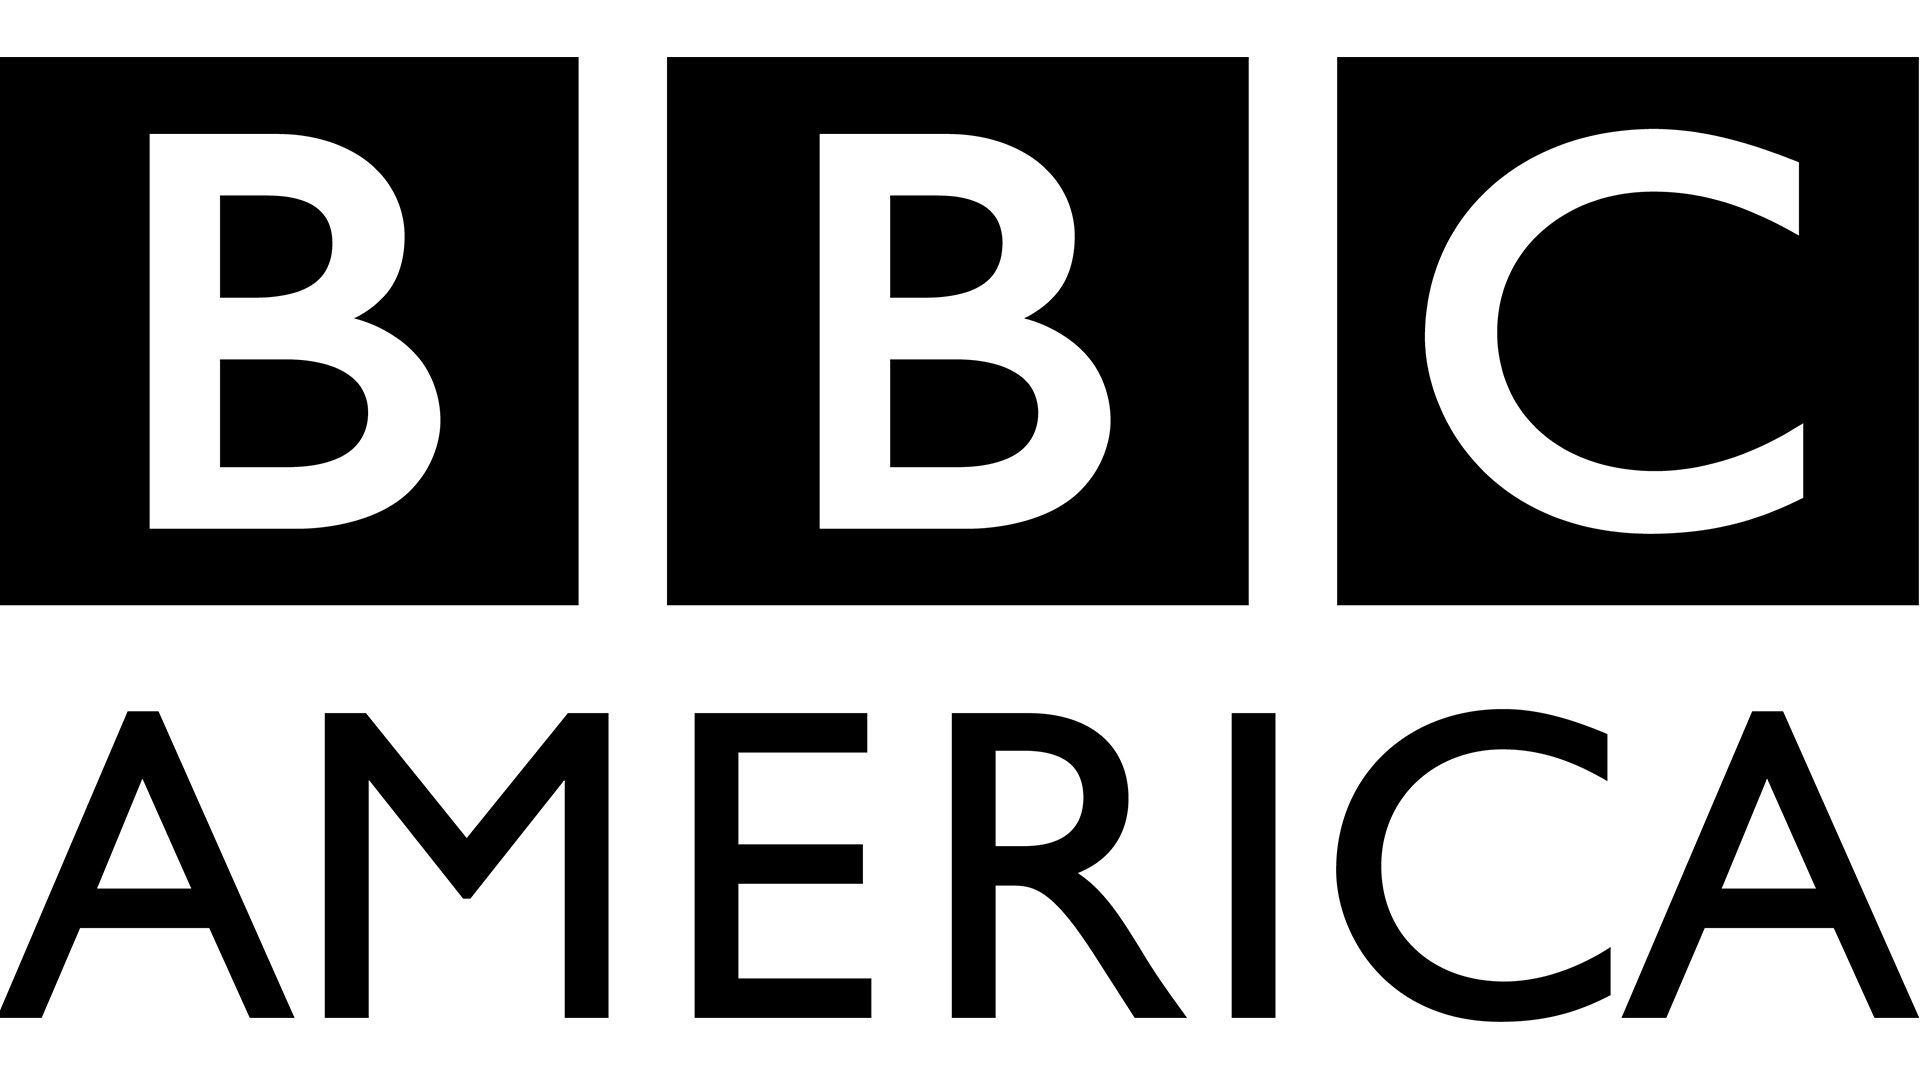 BBC News America